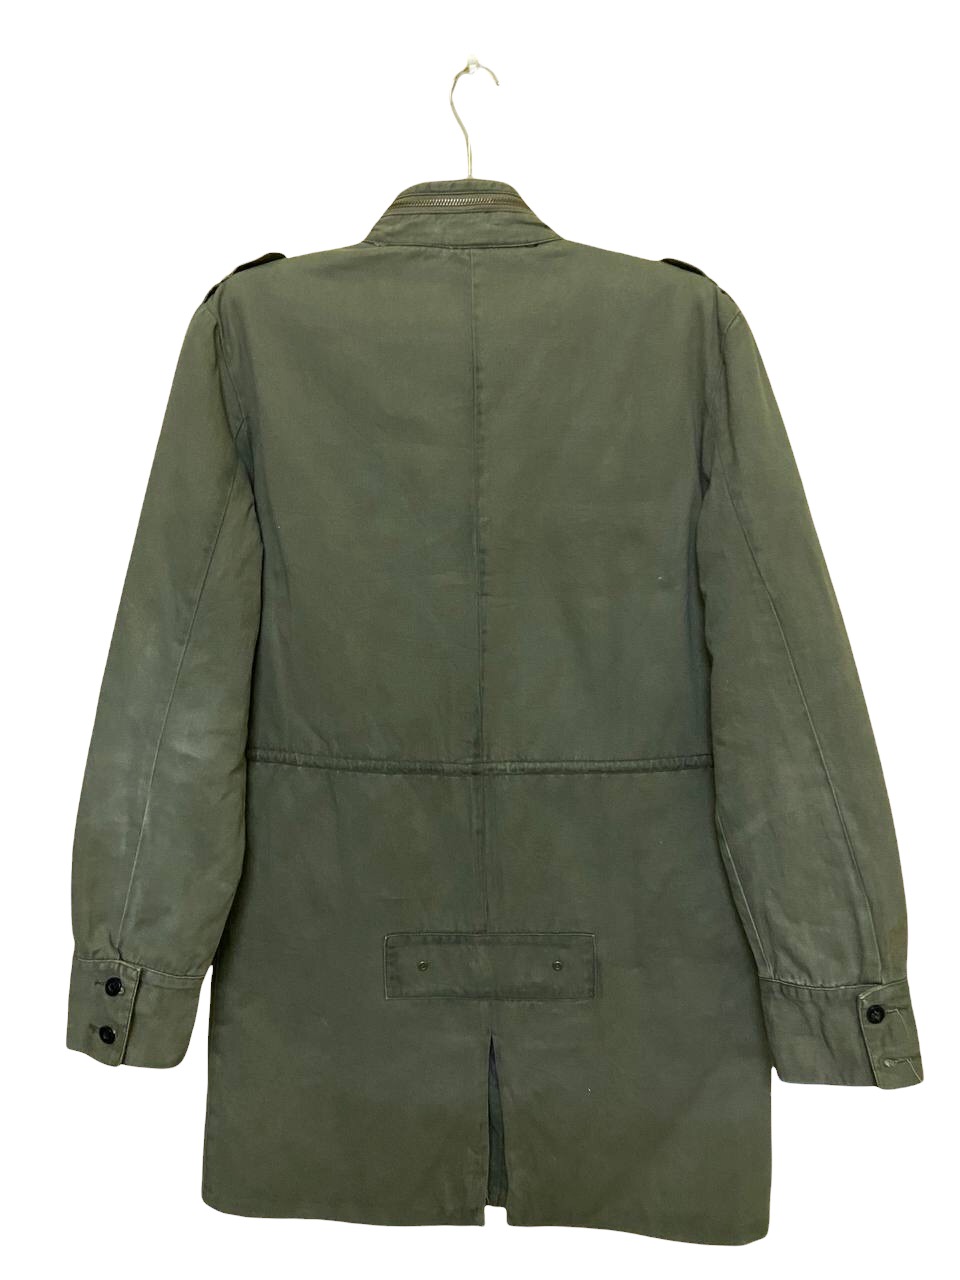 N Hollywood Fishtail Army Jacket - 2